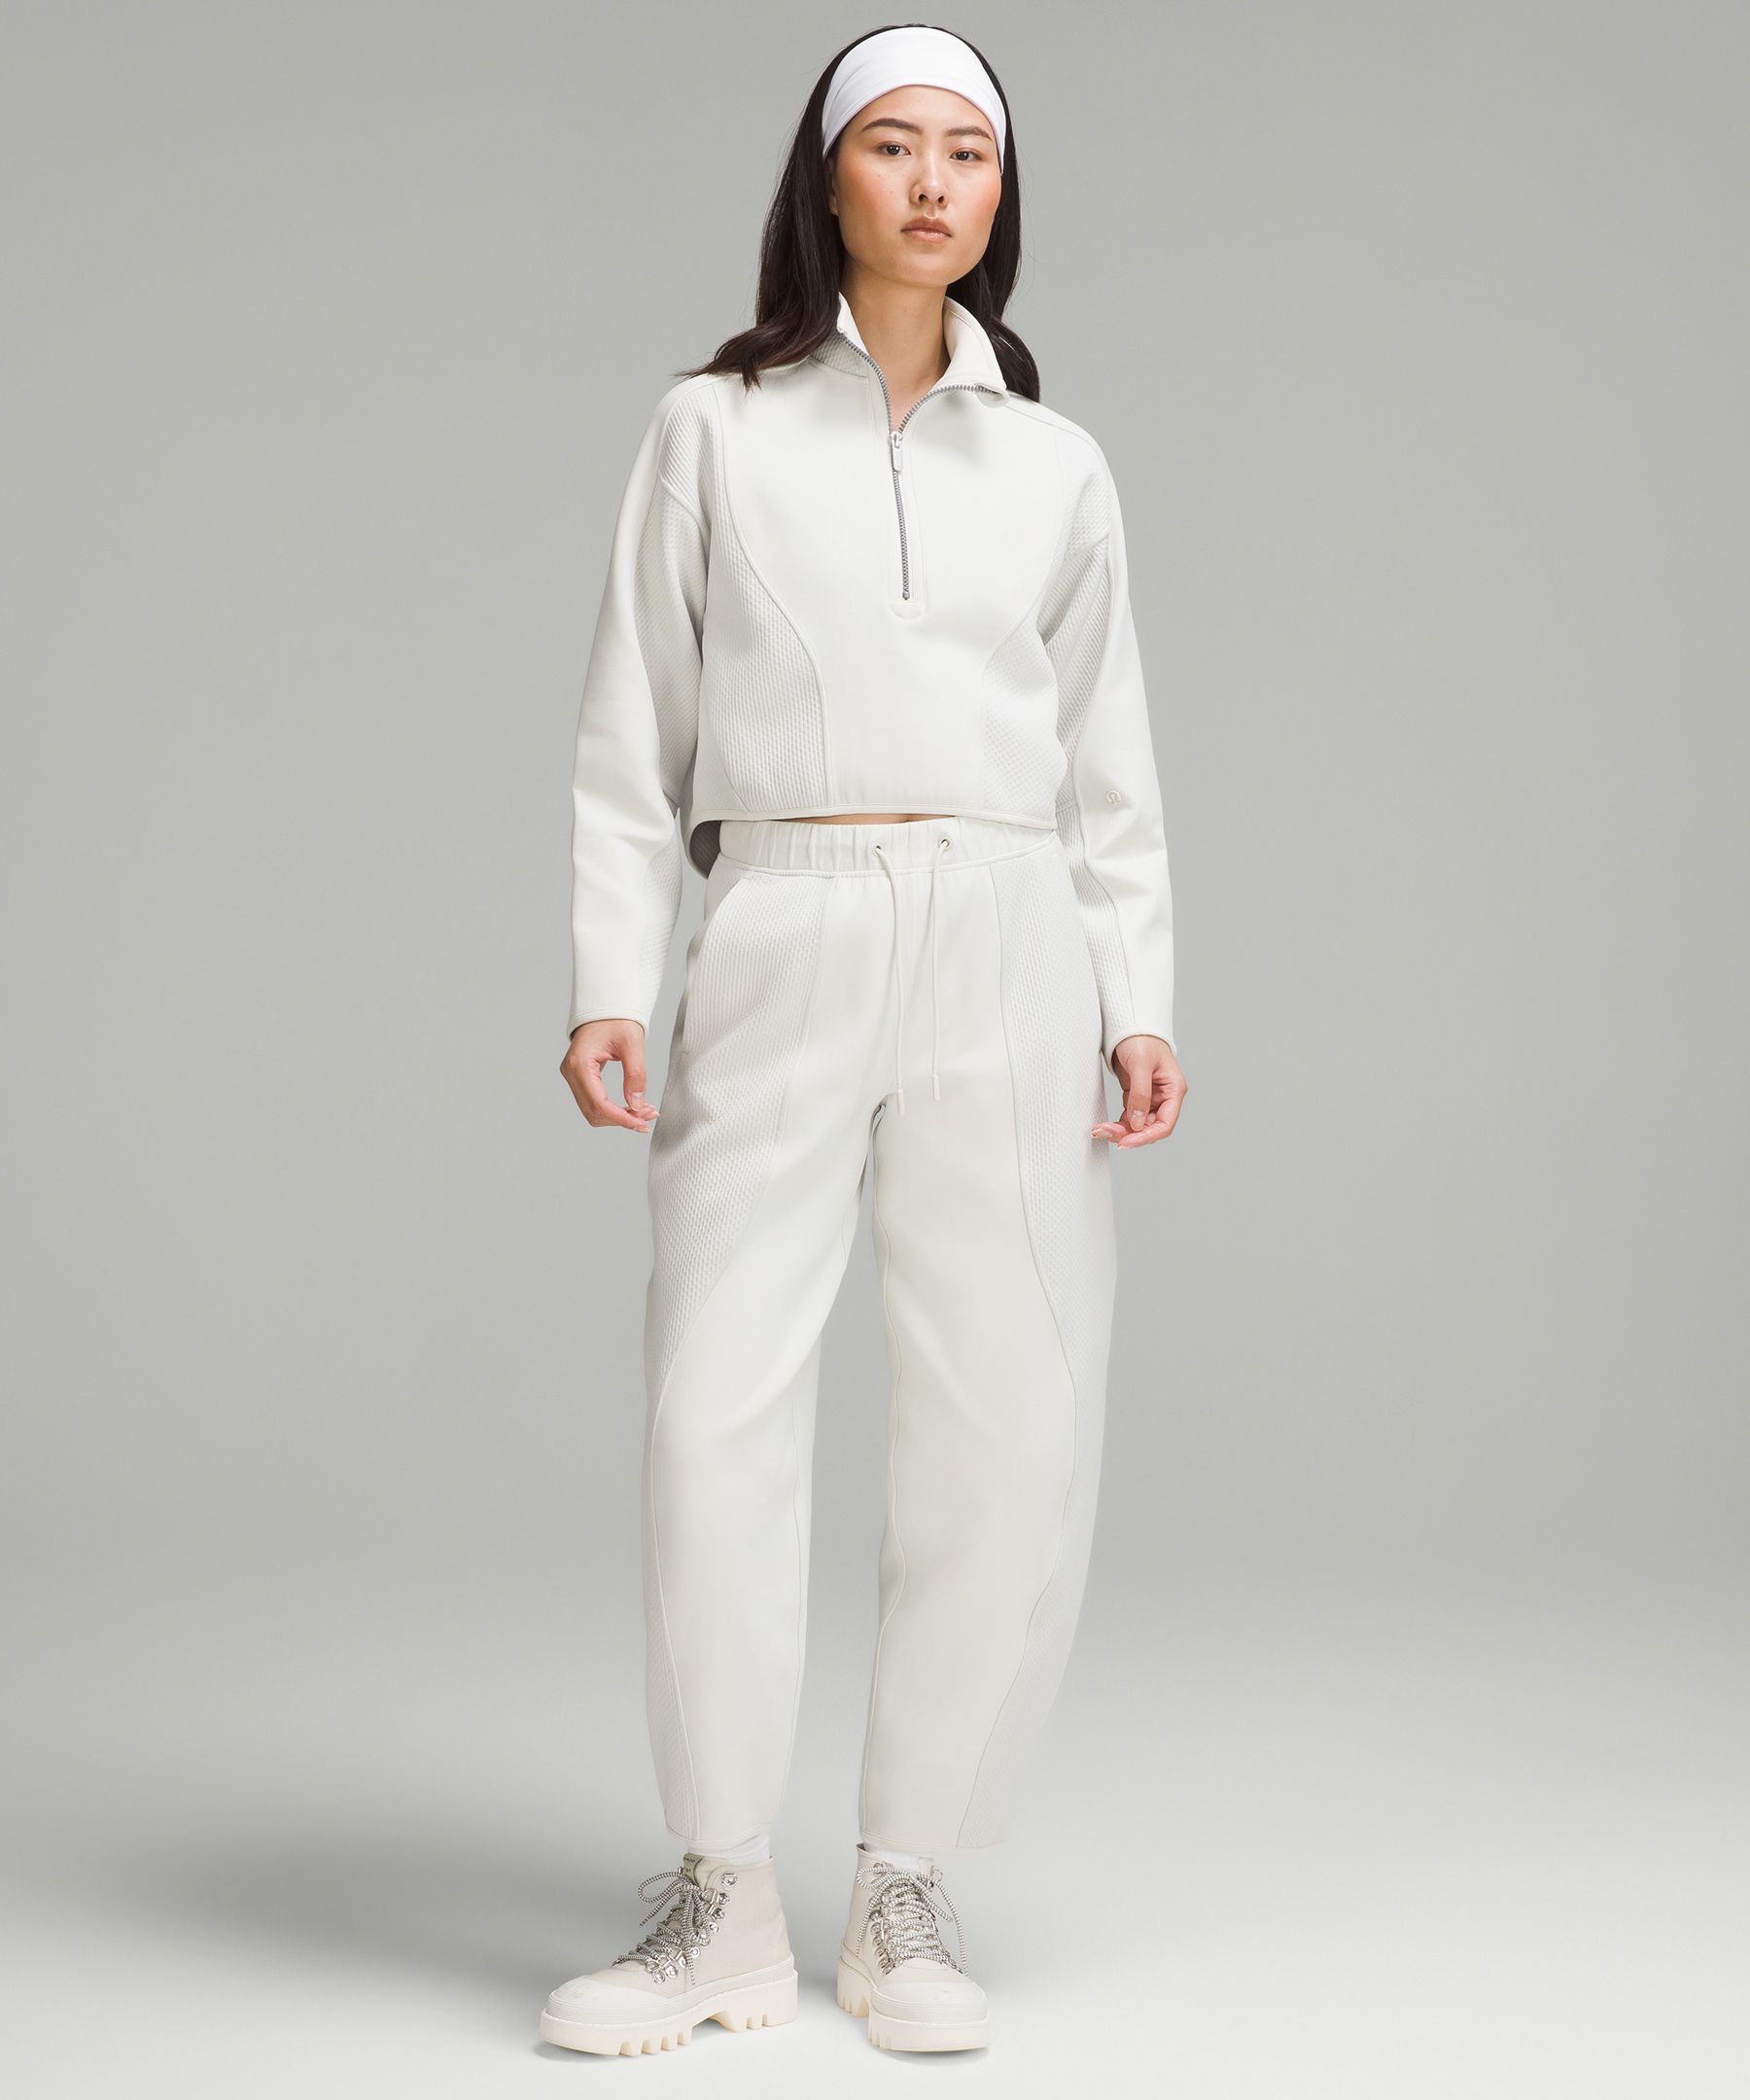 Mixed Fabric Half-Zip Pullover | Women's Hoodies & Sweatshirts | lululemon